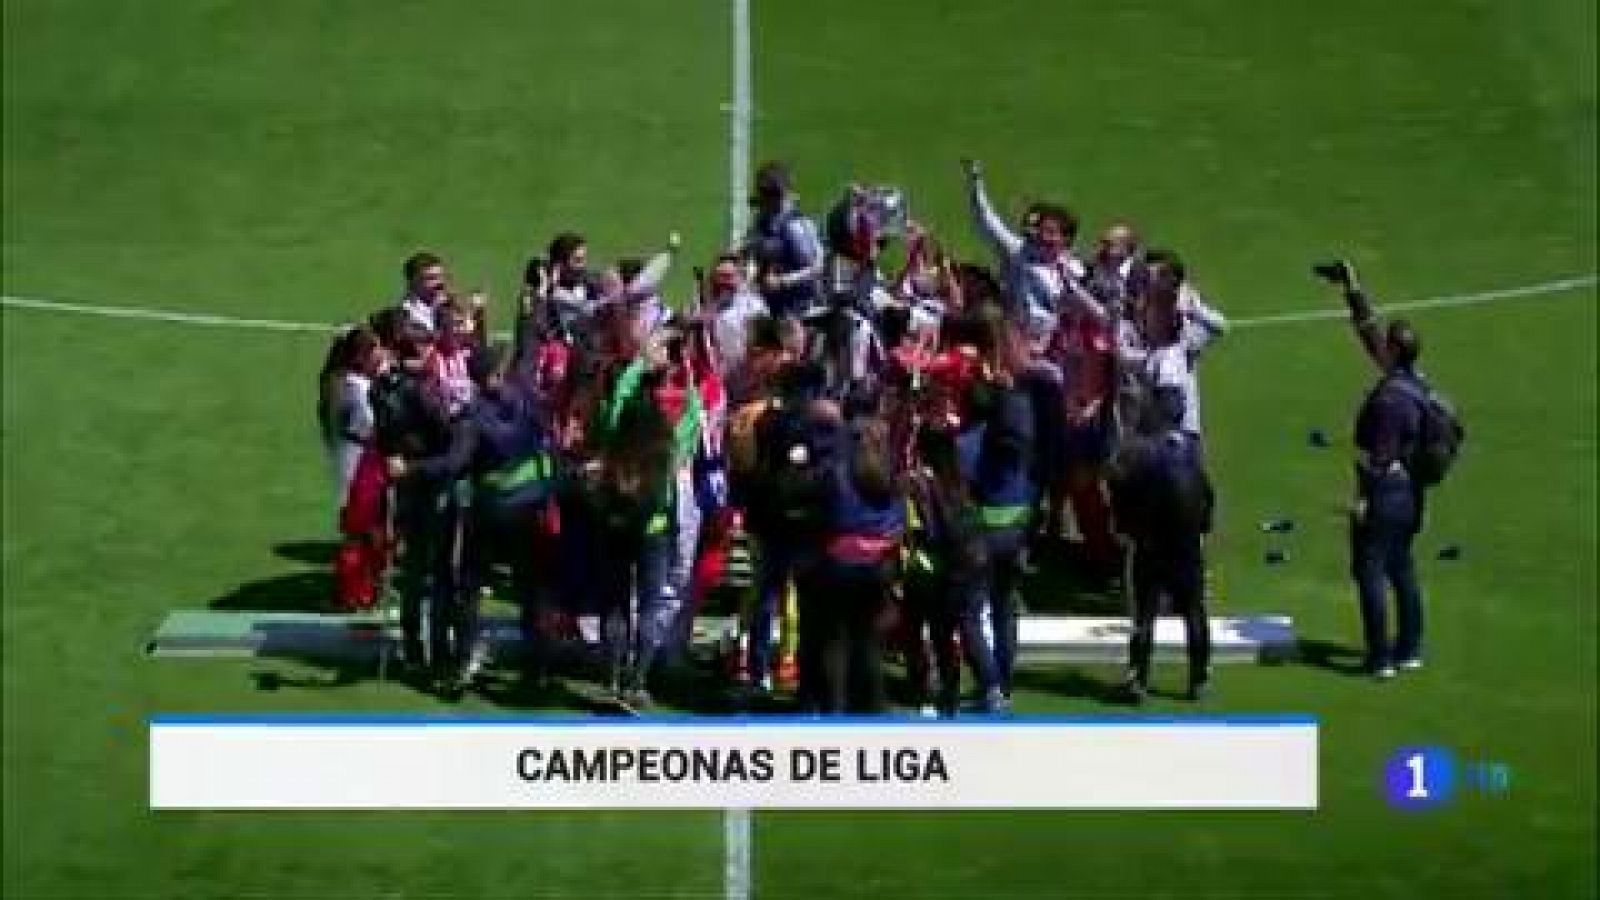 Fútbol | El Atlético gana la tercera Liga femenina seguida - RTVE.es